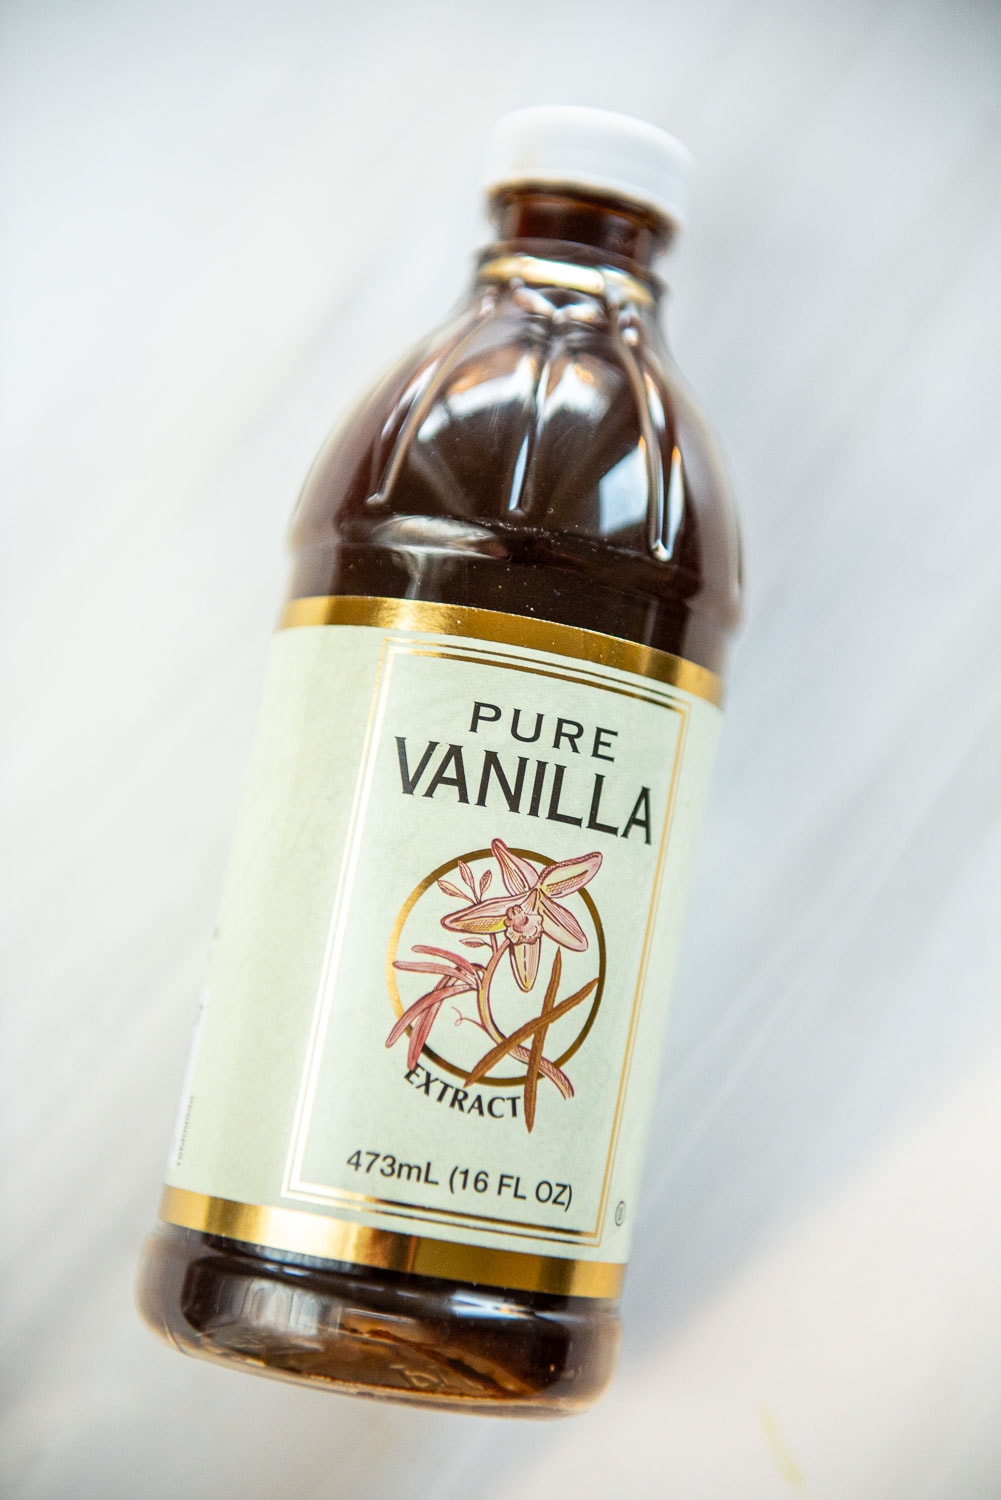 14 fl oz of pure vanilla extract